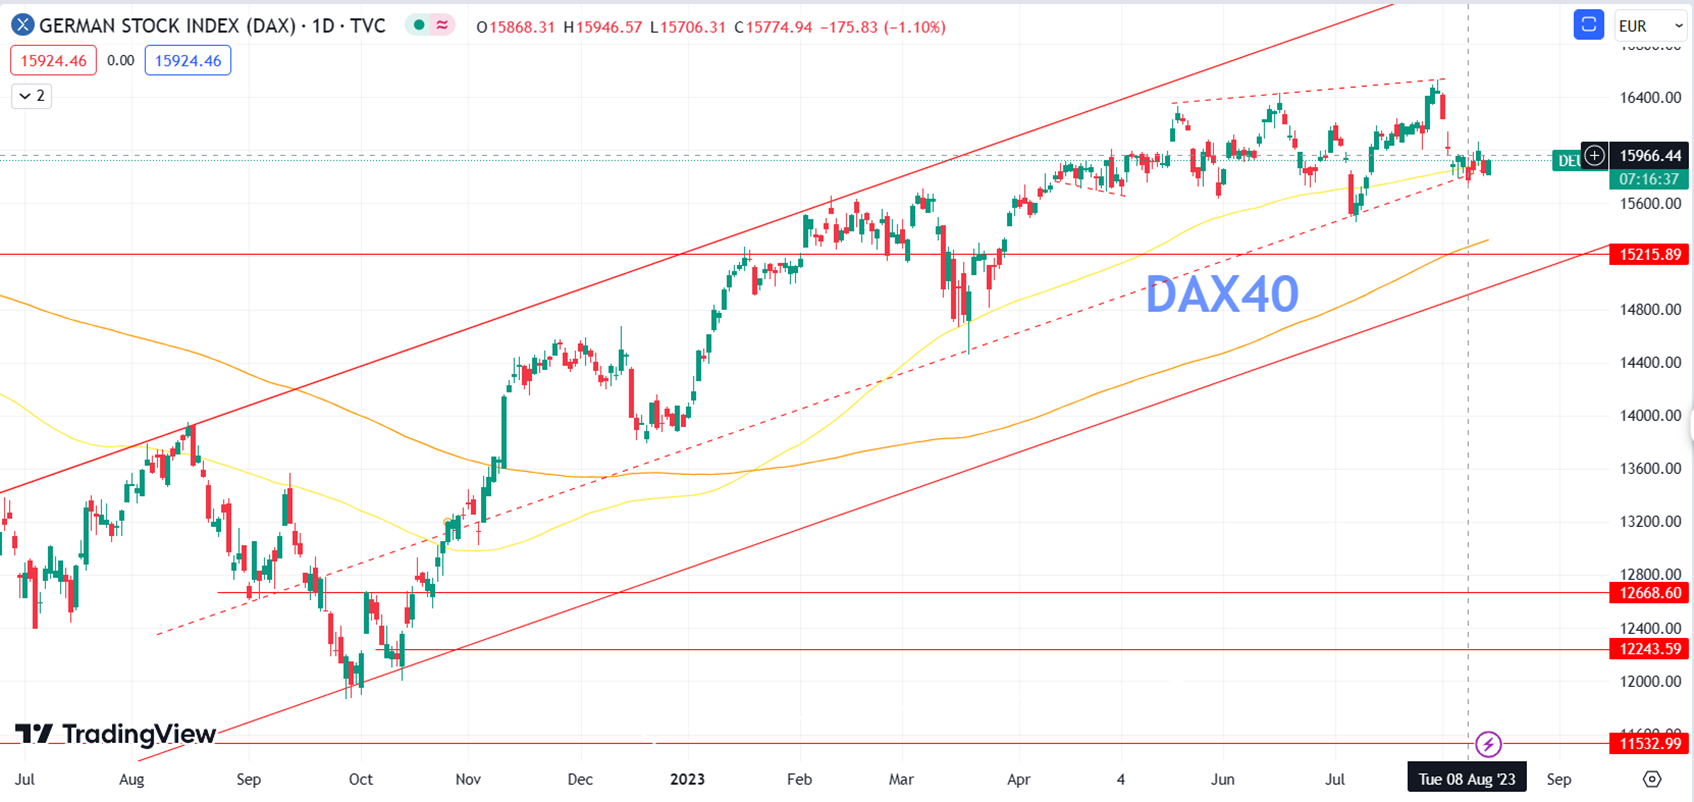 Daily Analysis DAX40 - 14 Aug 2023